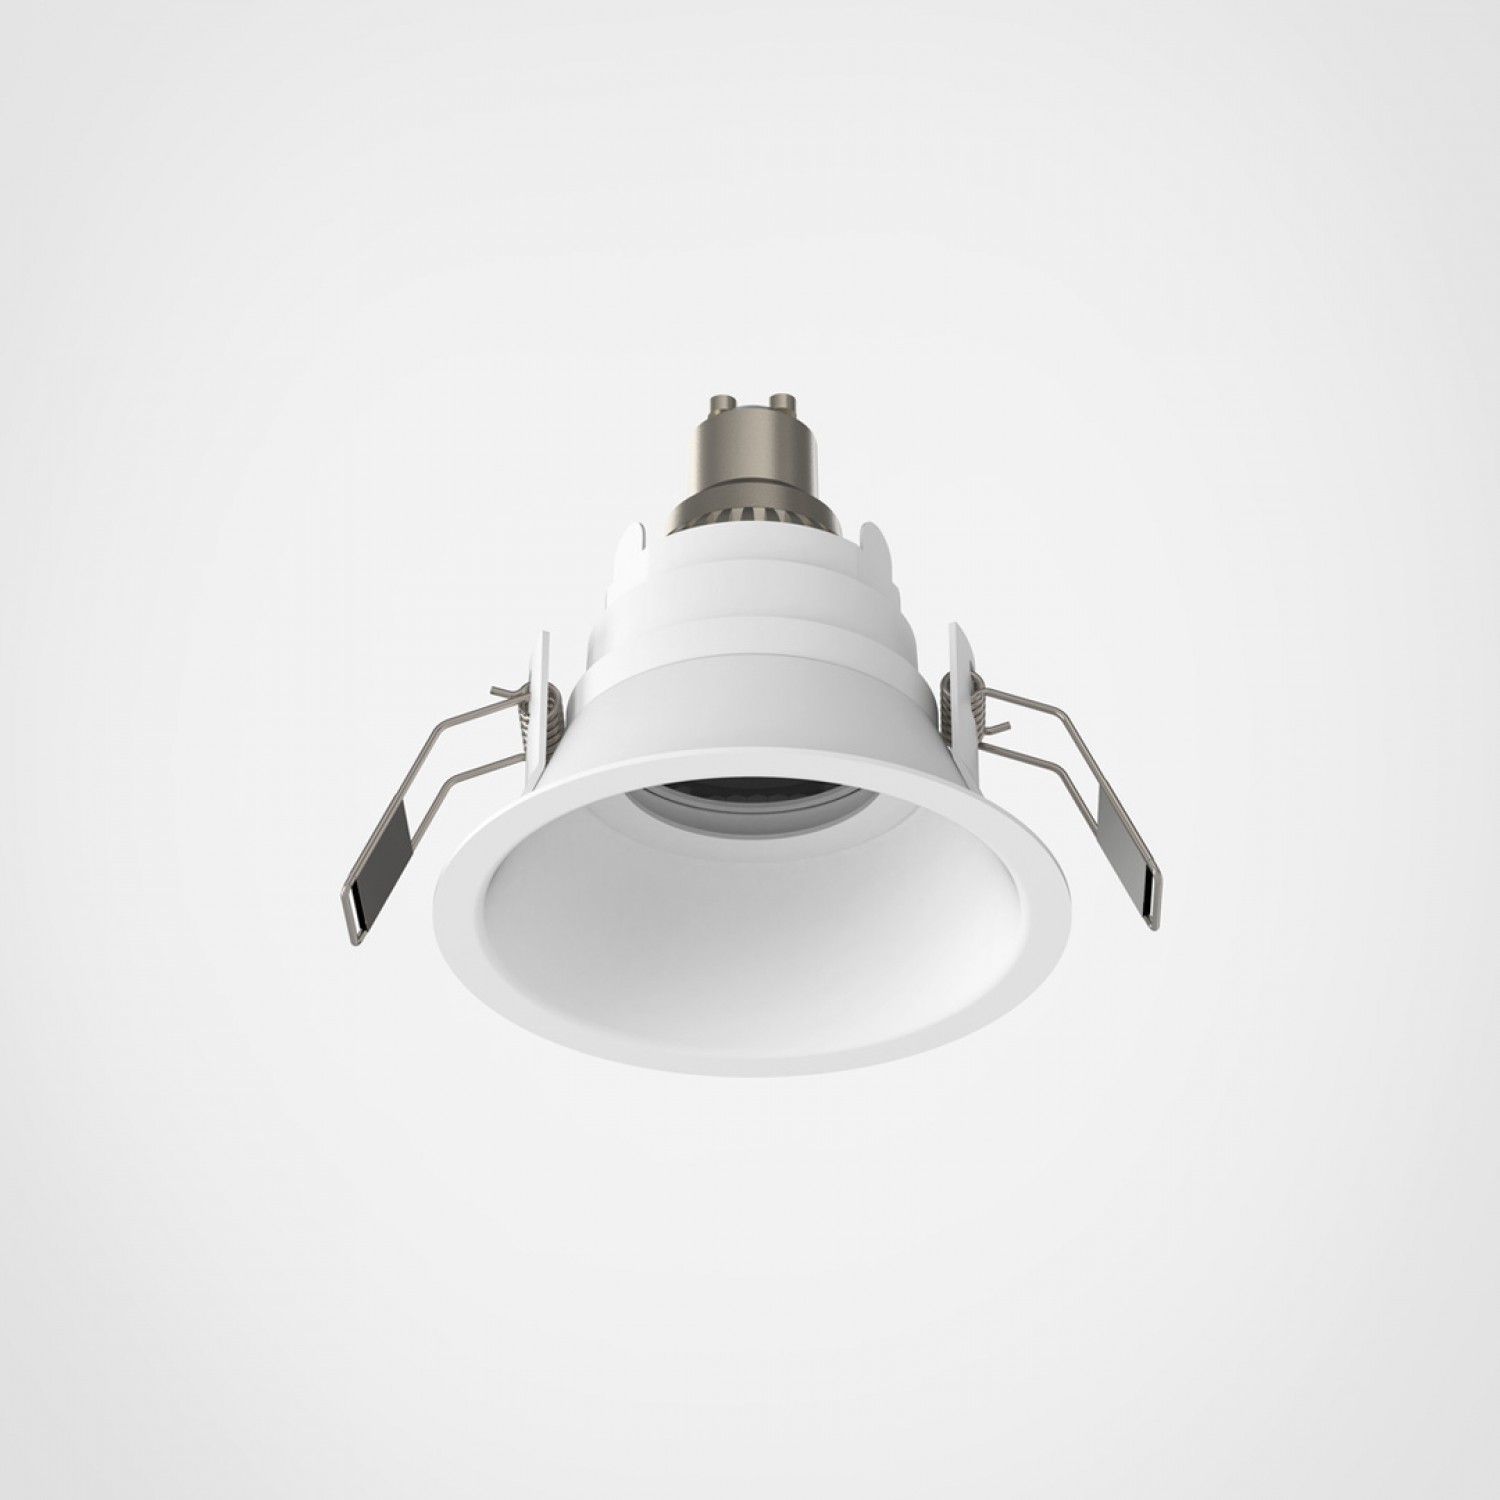 Врезной точечный светильник Astro Minima Slimline Round Fixed Fire-Rated IP65 1249034